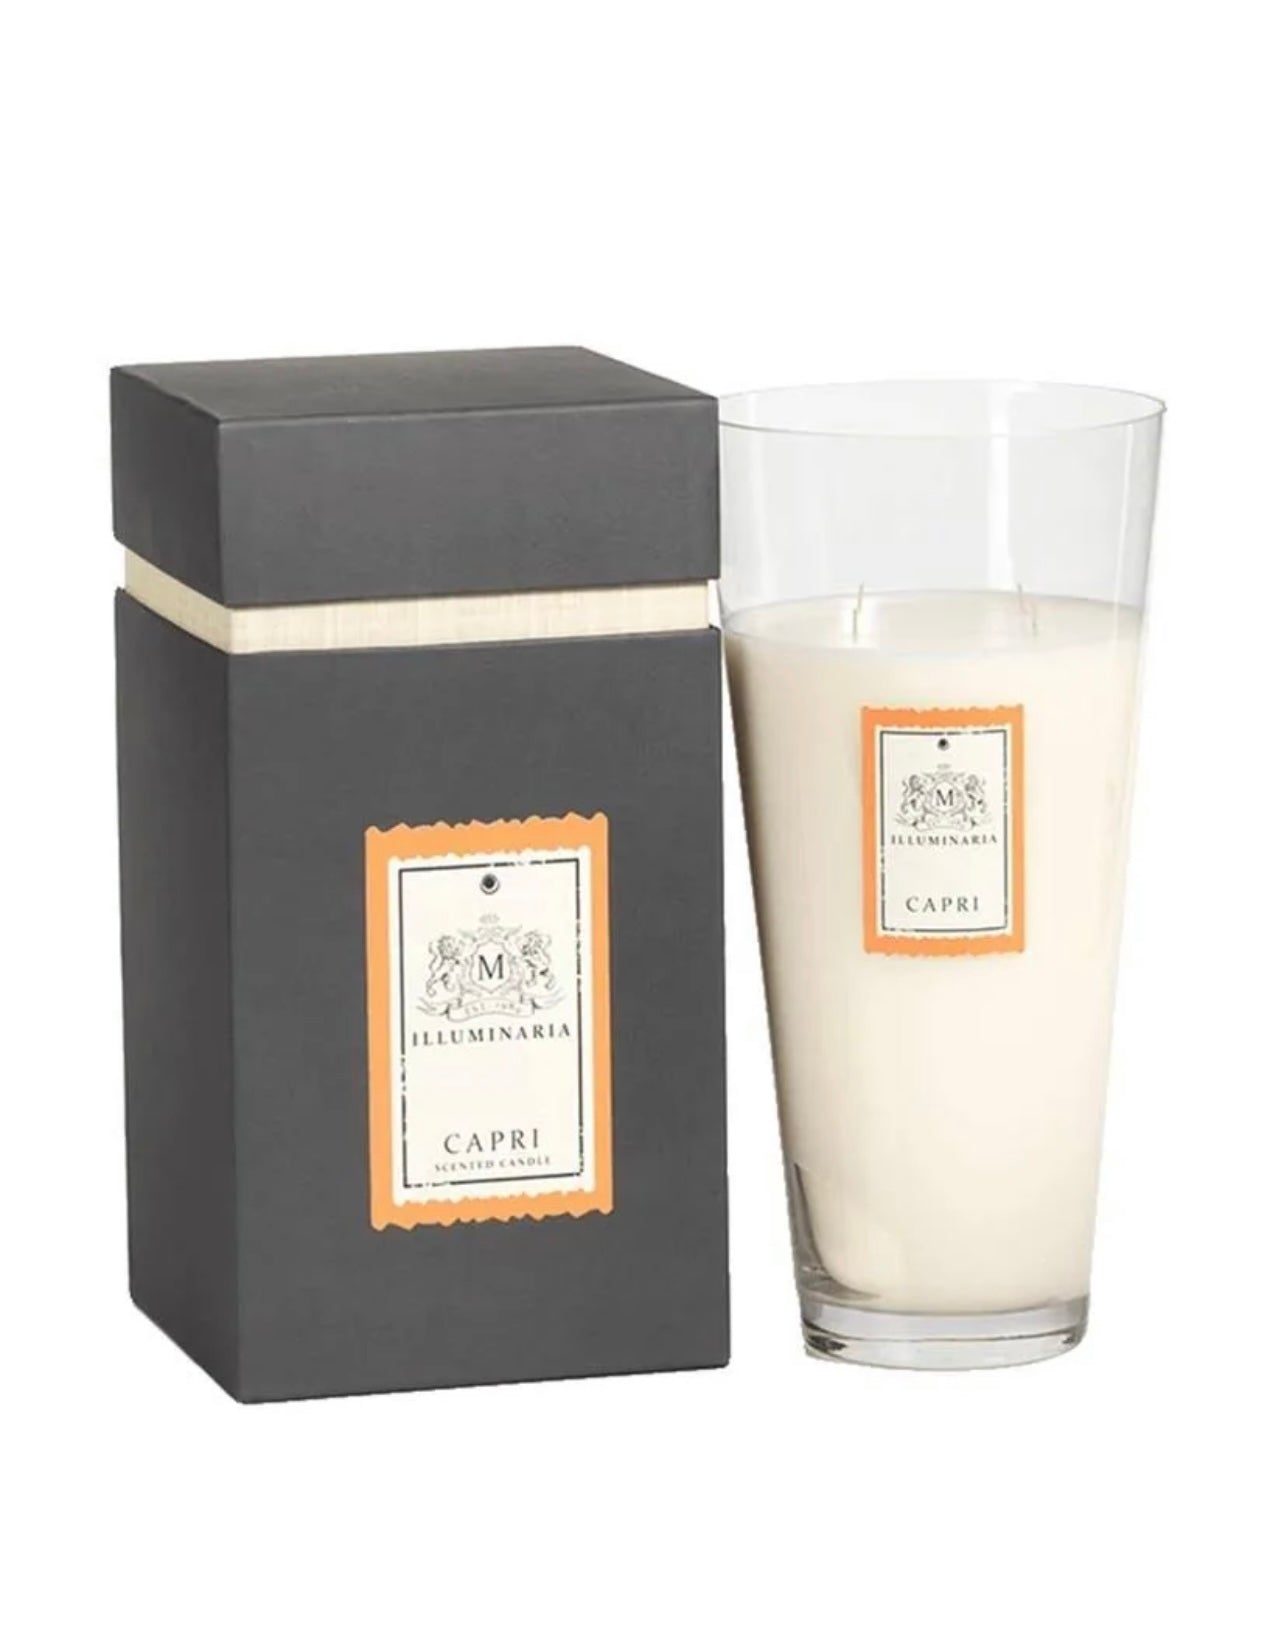 Capri - Illuminaria Scented Candle Jar in Gift Box (Large)